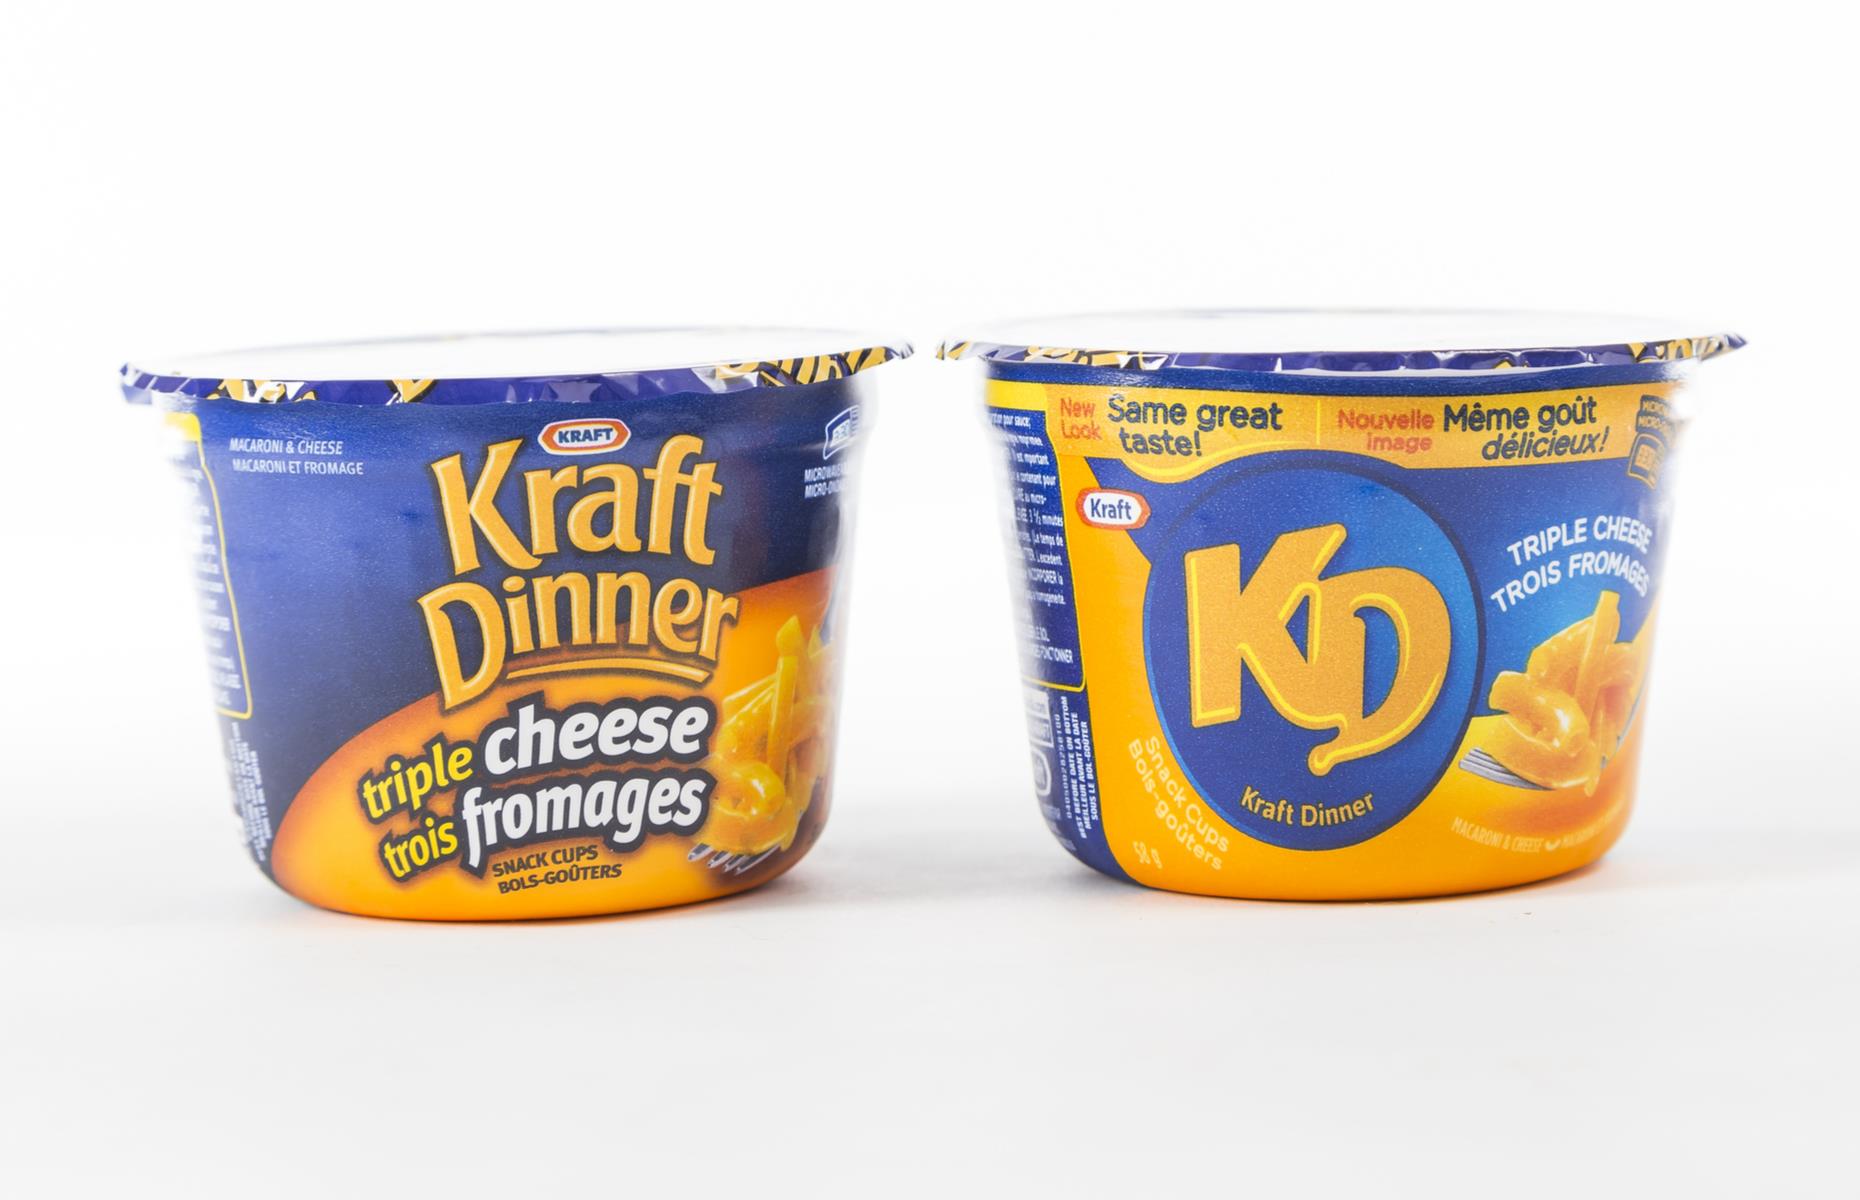 Kraft Dinner becomes KD